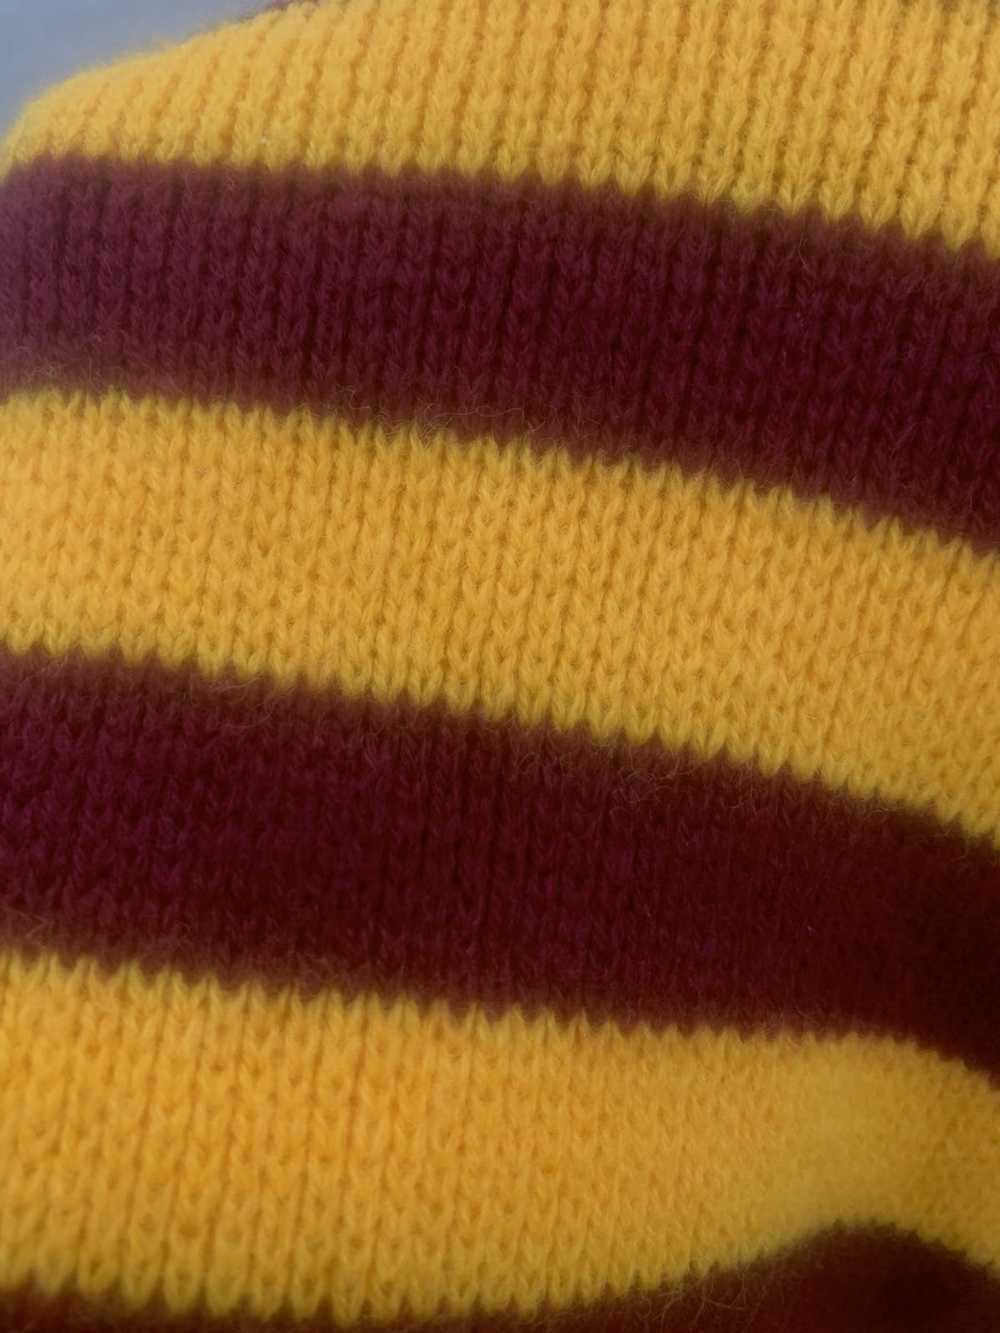 NFL Vintage Authentic NFL Knit Sweater - image 4